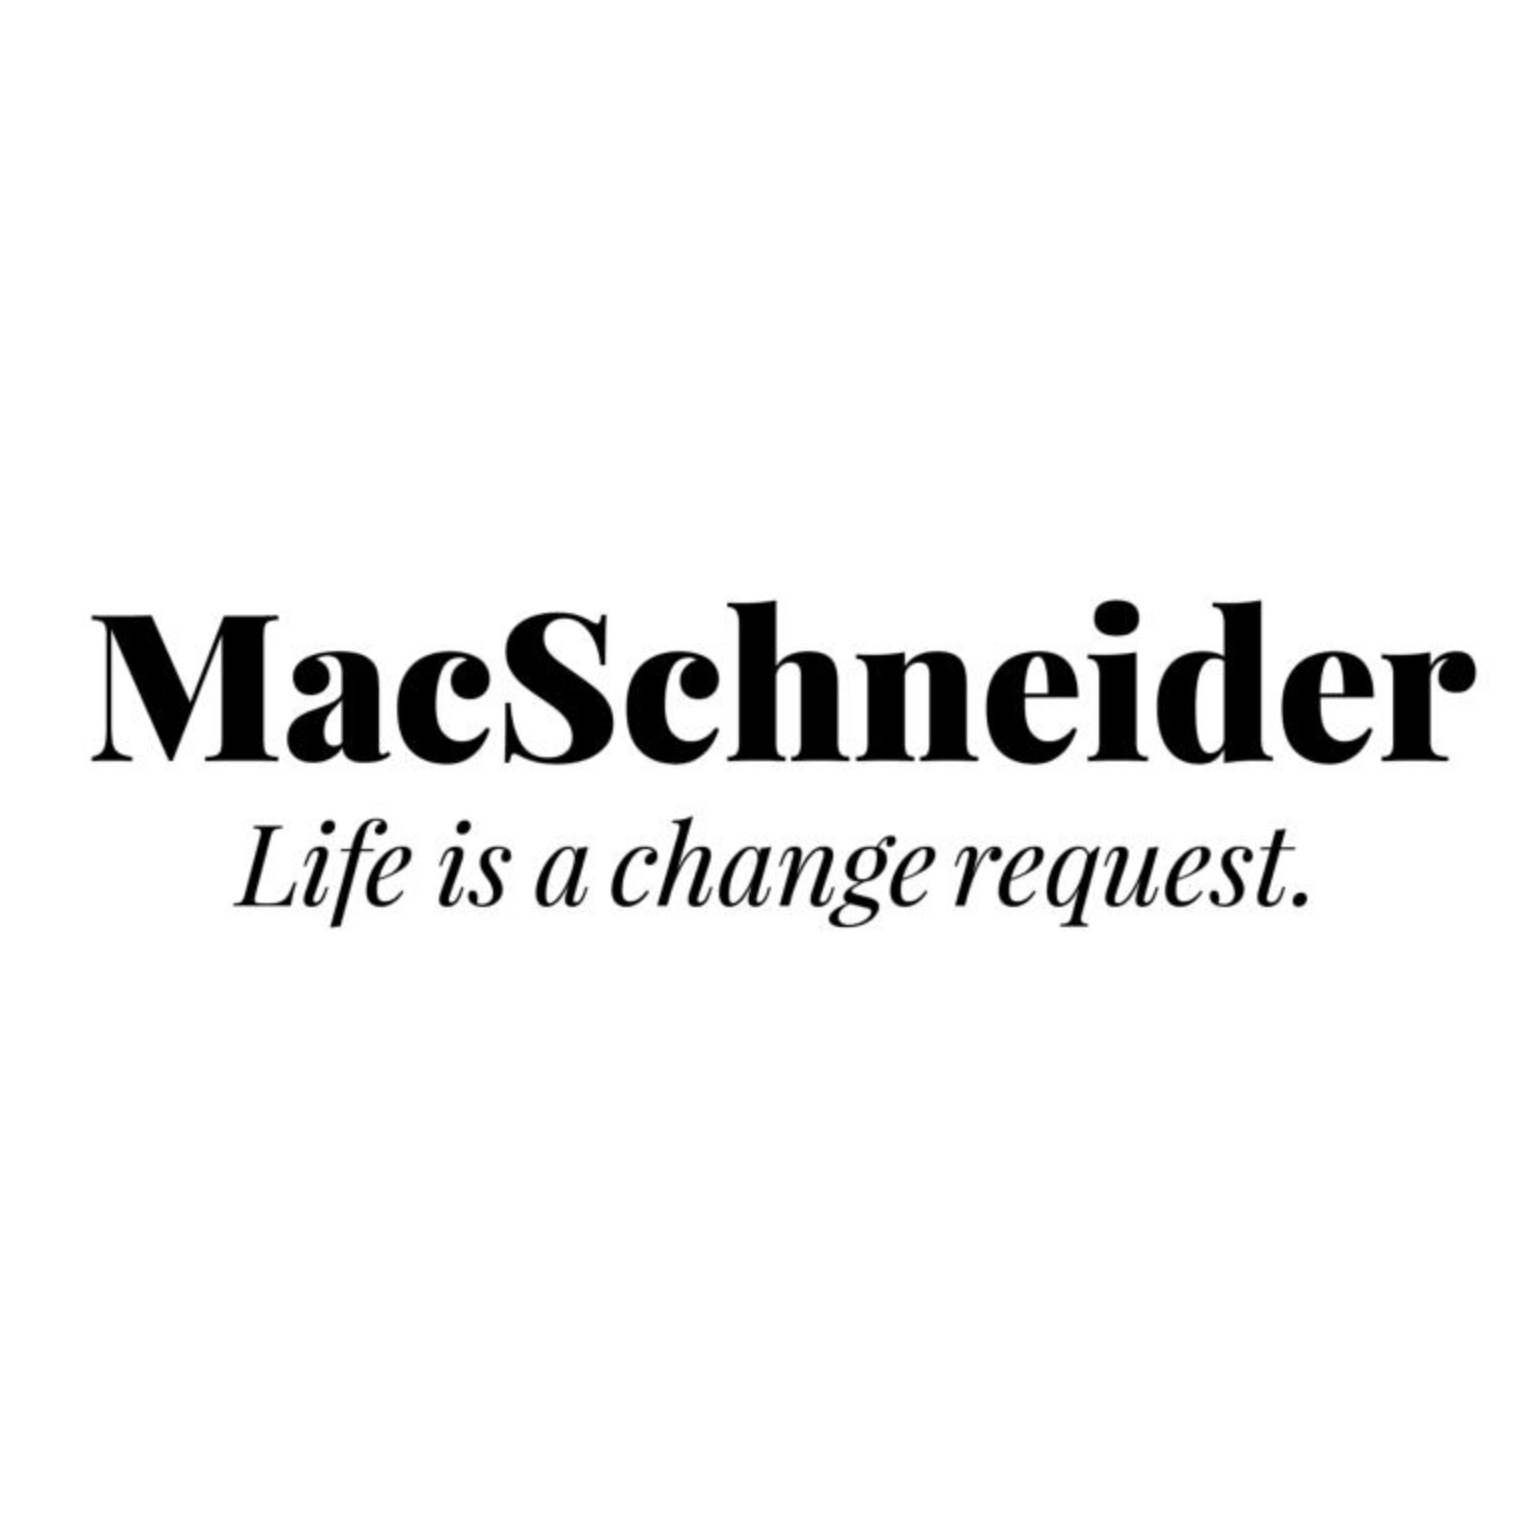 MacSchneider